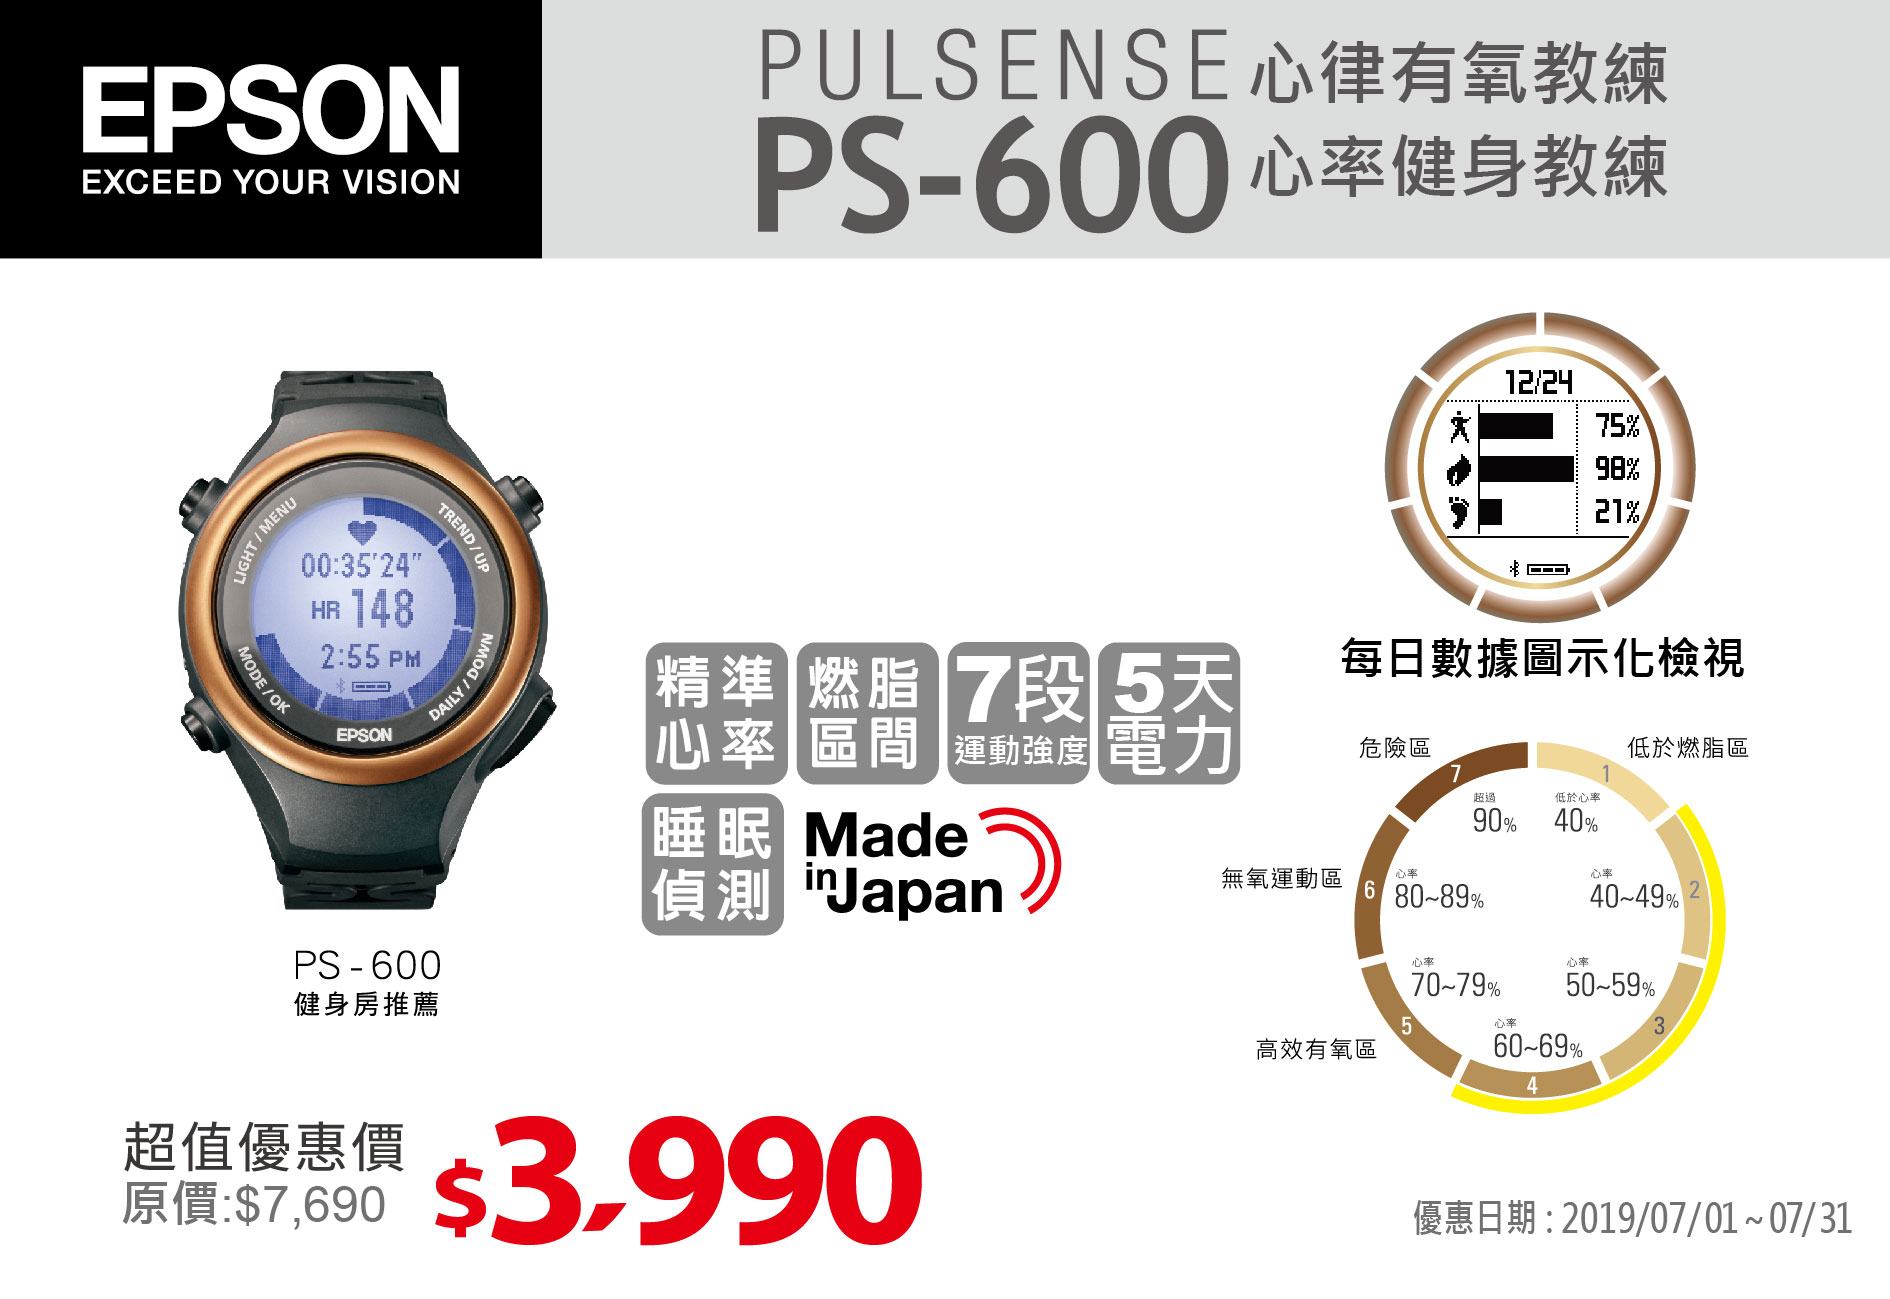 EPSON PS-600 Pulsense 心率有氧教練 - myepson 台灣愛普生原廠購物網站